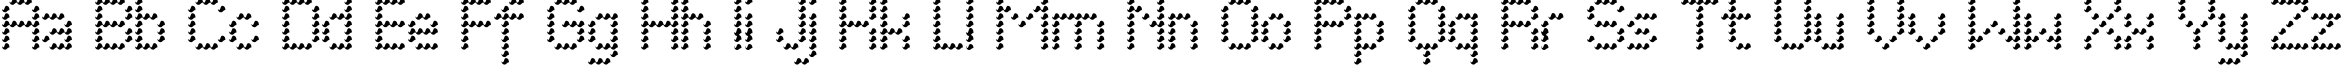 Пример написания английского алфавита шрифтом PerfoWave